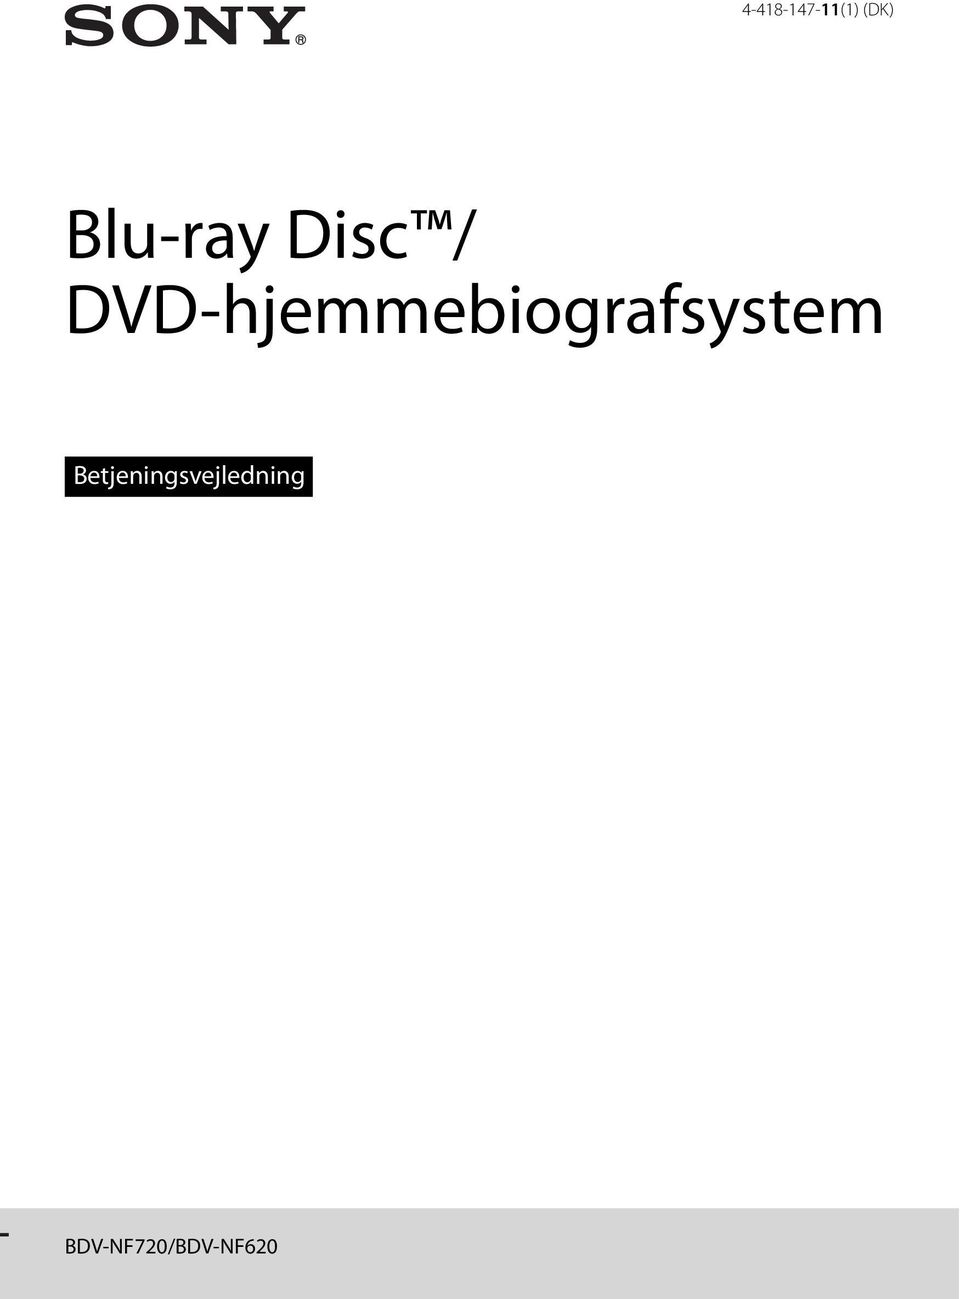 DVD-hjemmebiografsystem